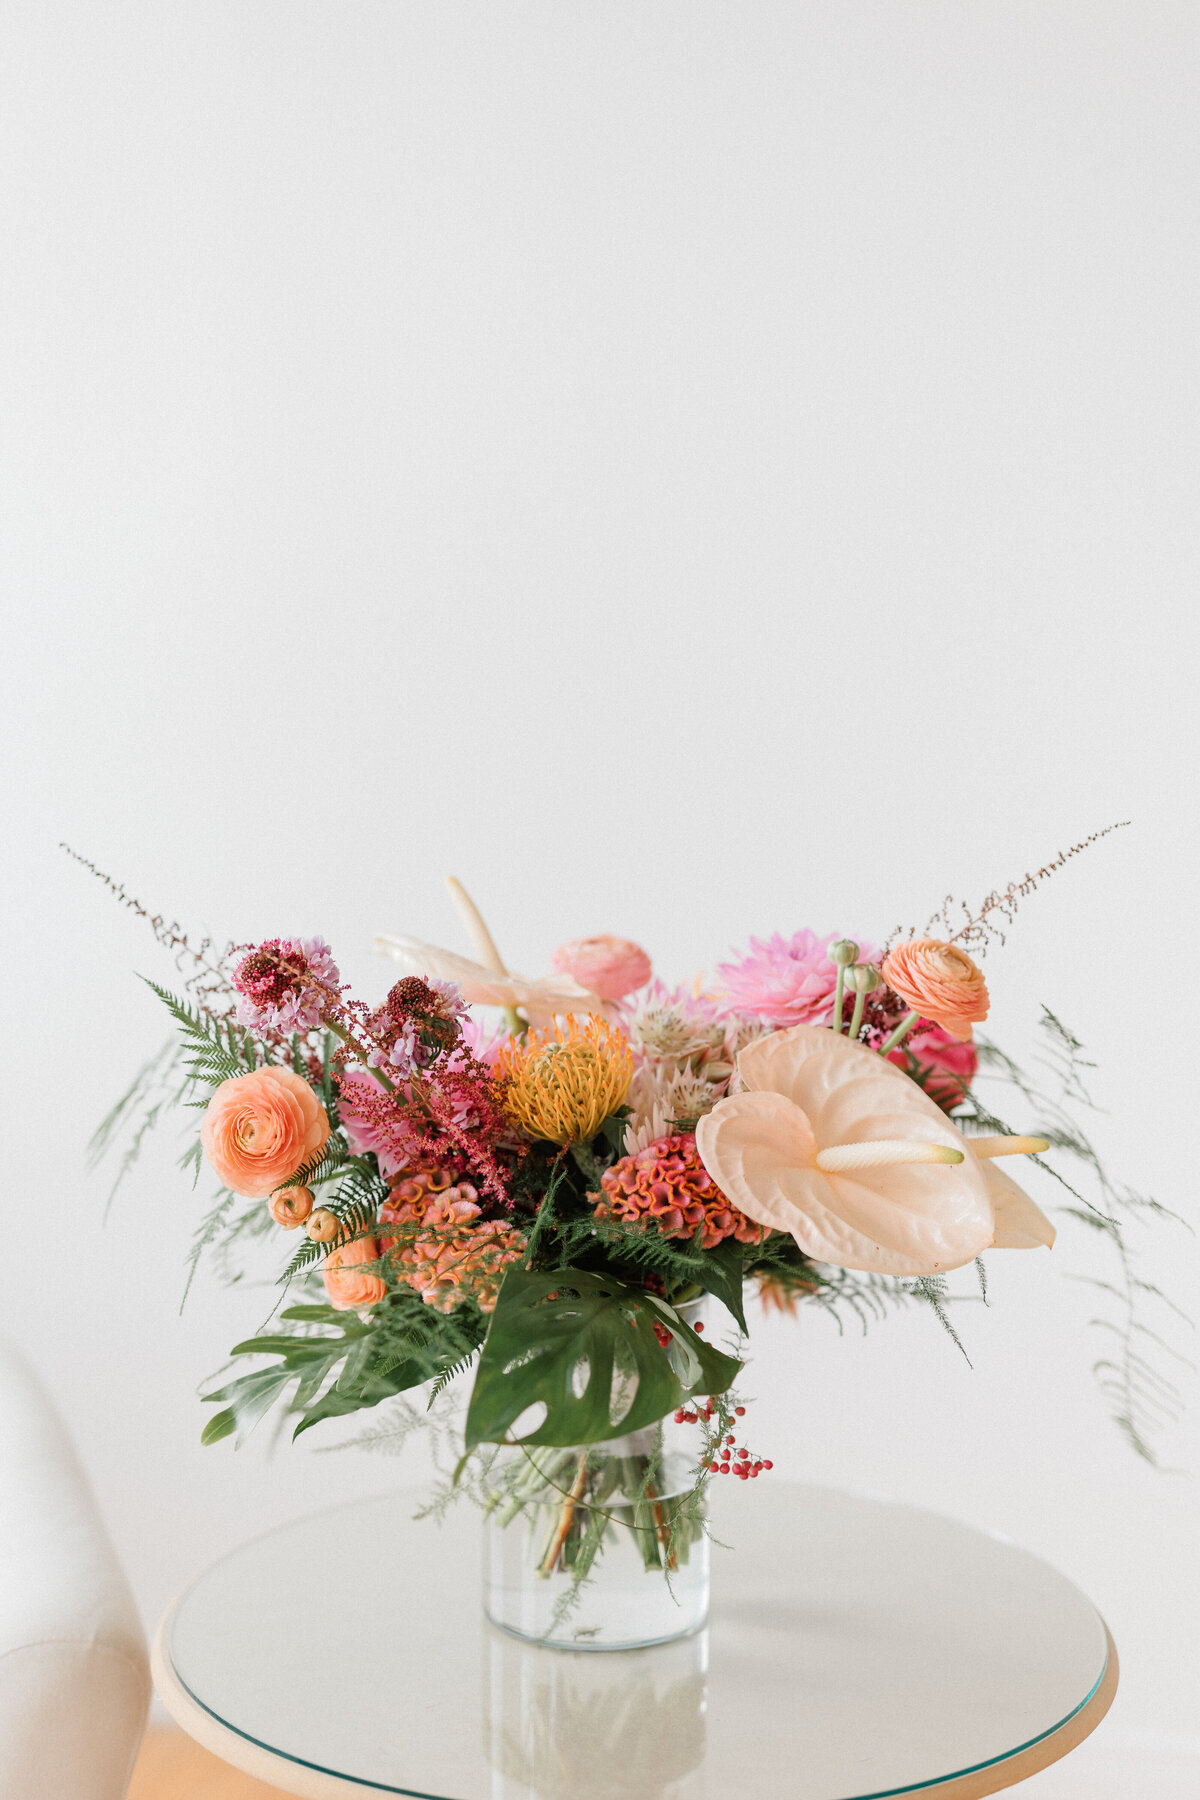 kitchener-floral-designer-branding-photos